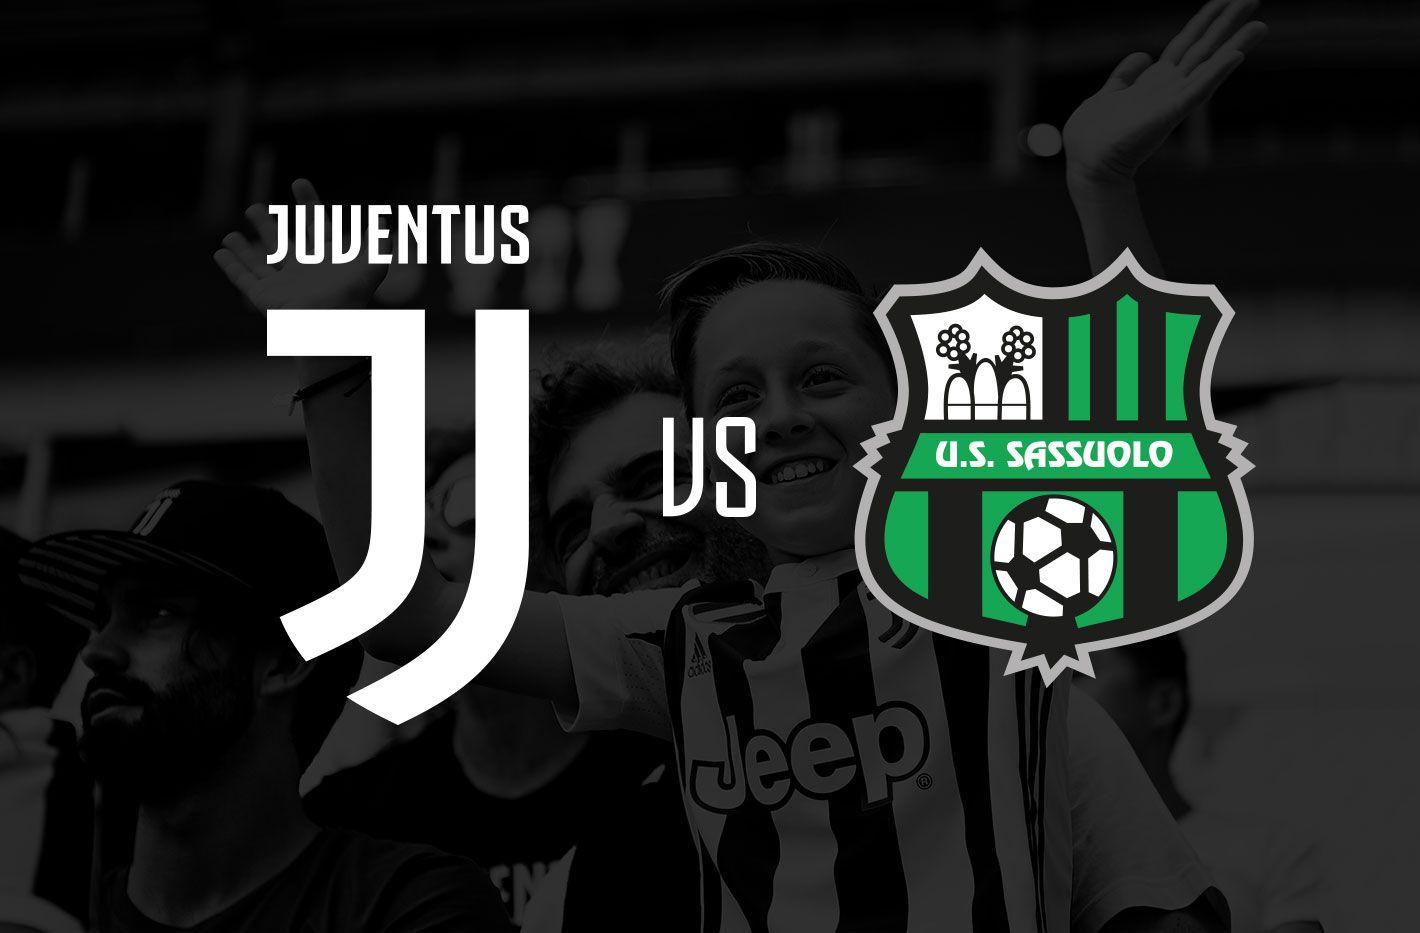 Sassuolo Logo - Juventus-Sassuolo tickets on general sale! - Juventus.com